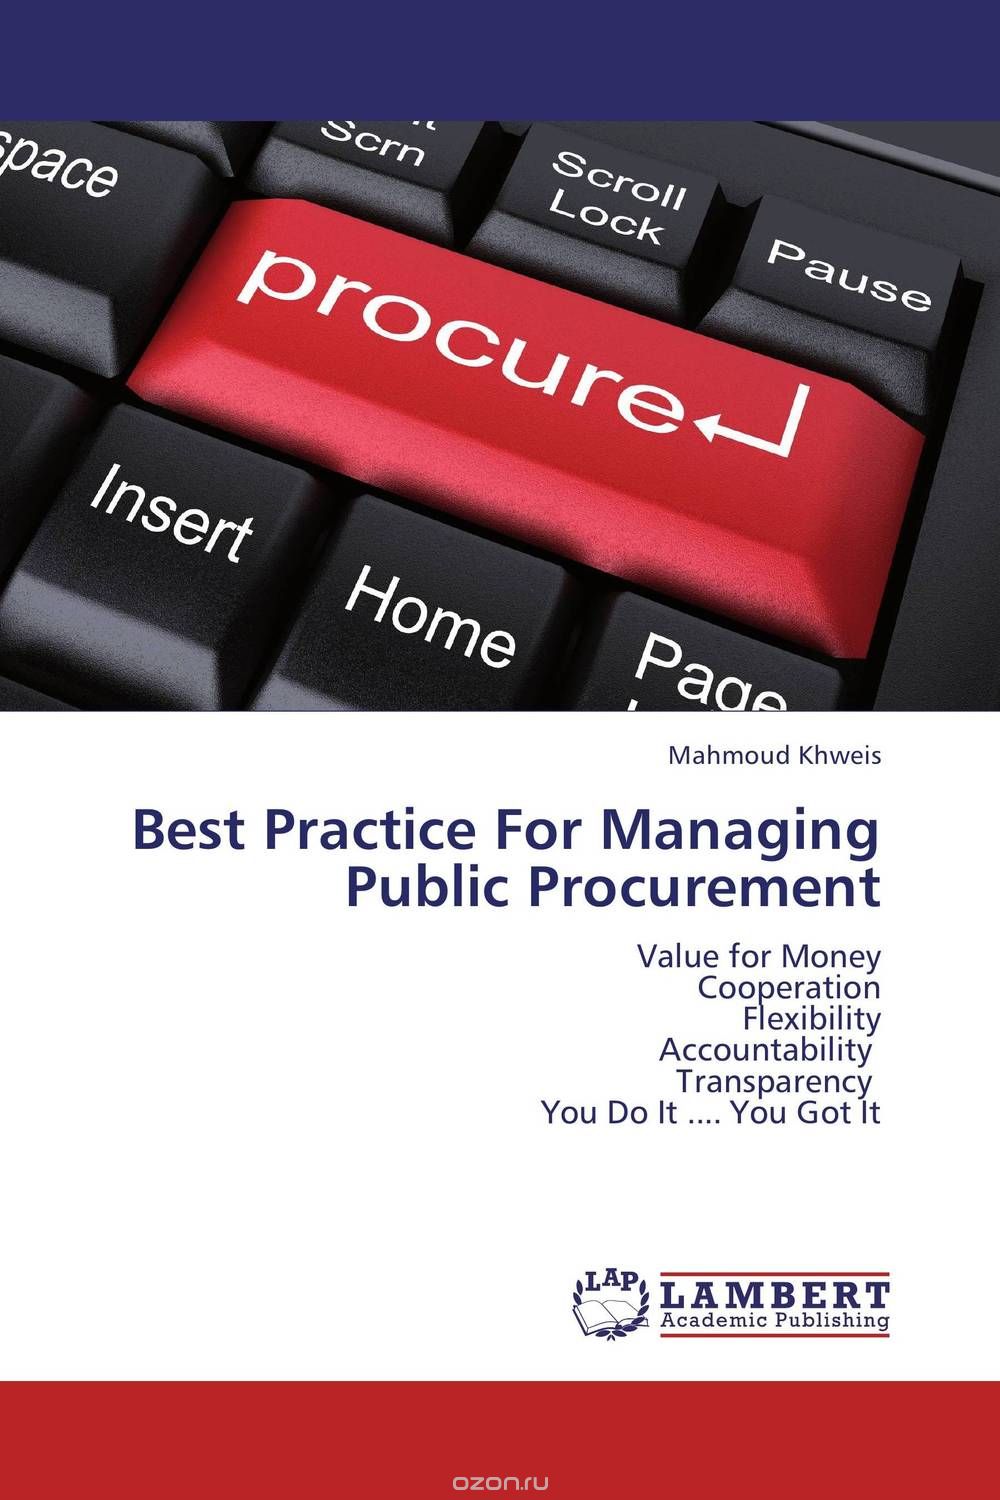 Скачать книгу "Best Practice For Managing Public Procurement"